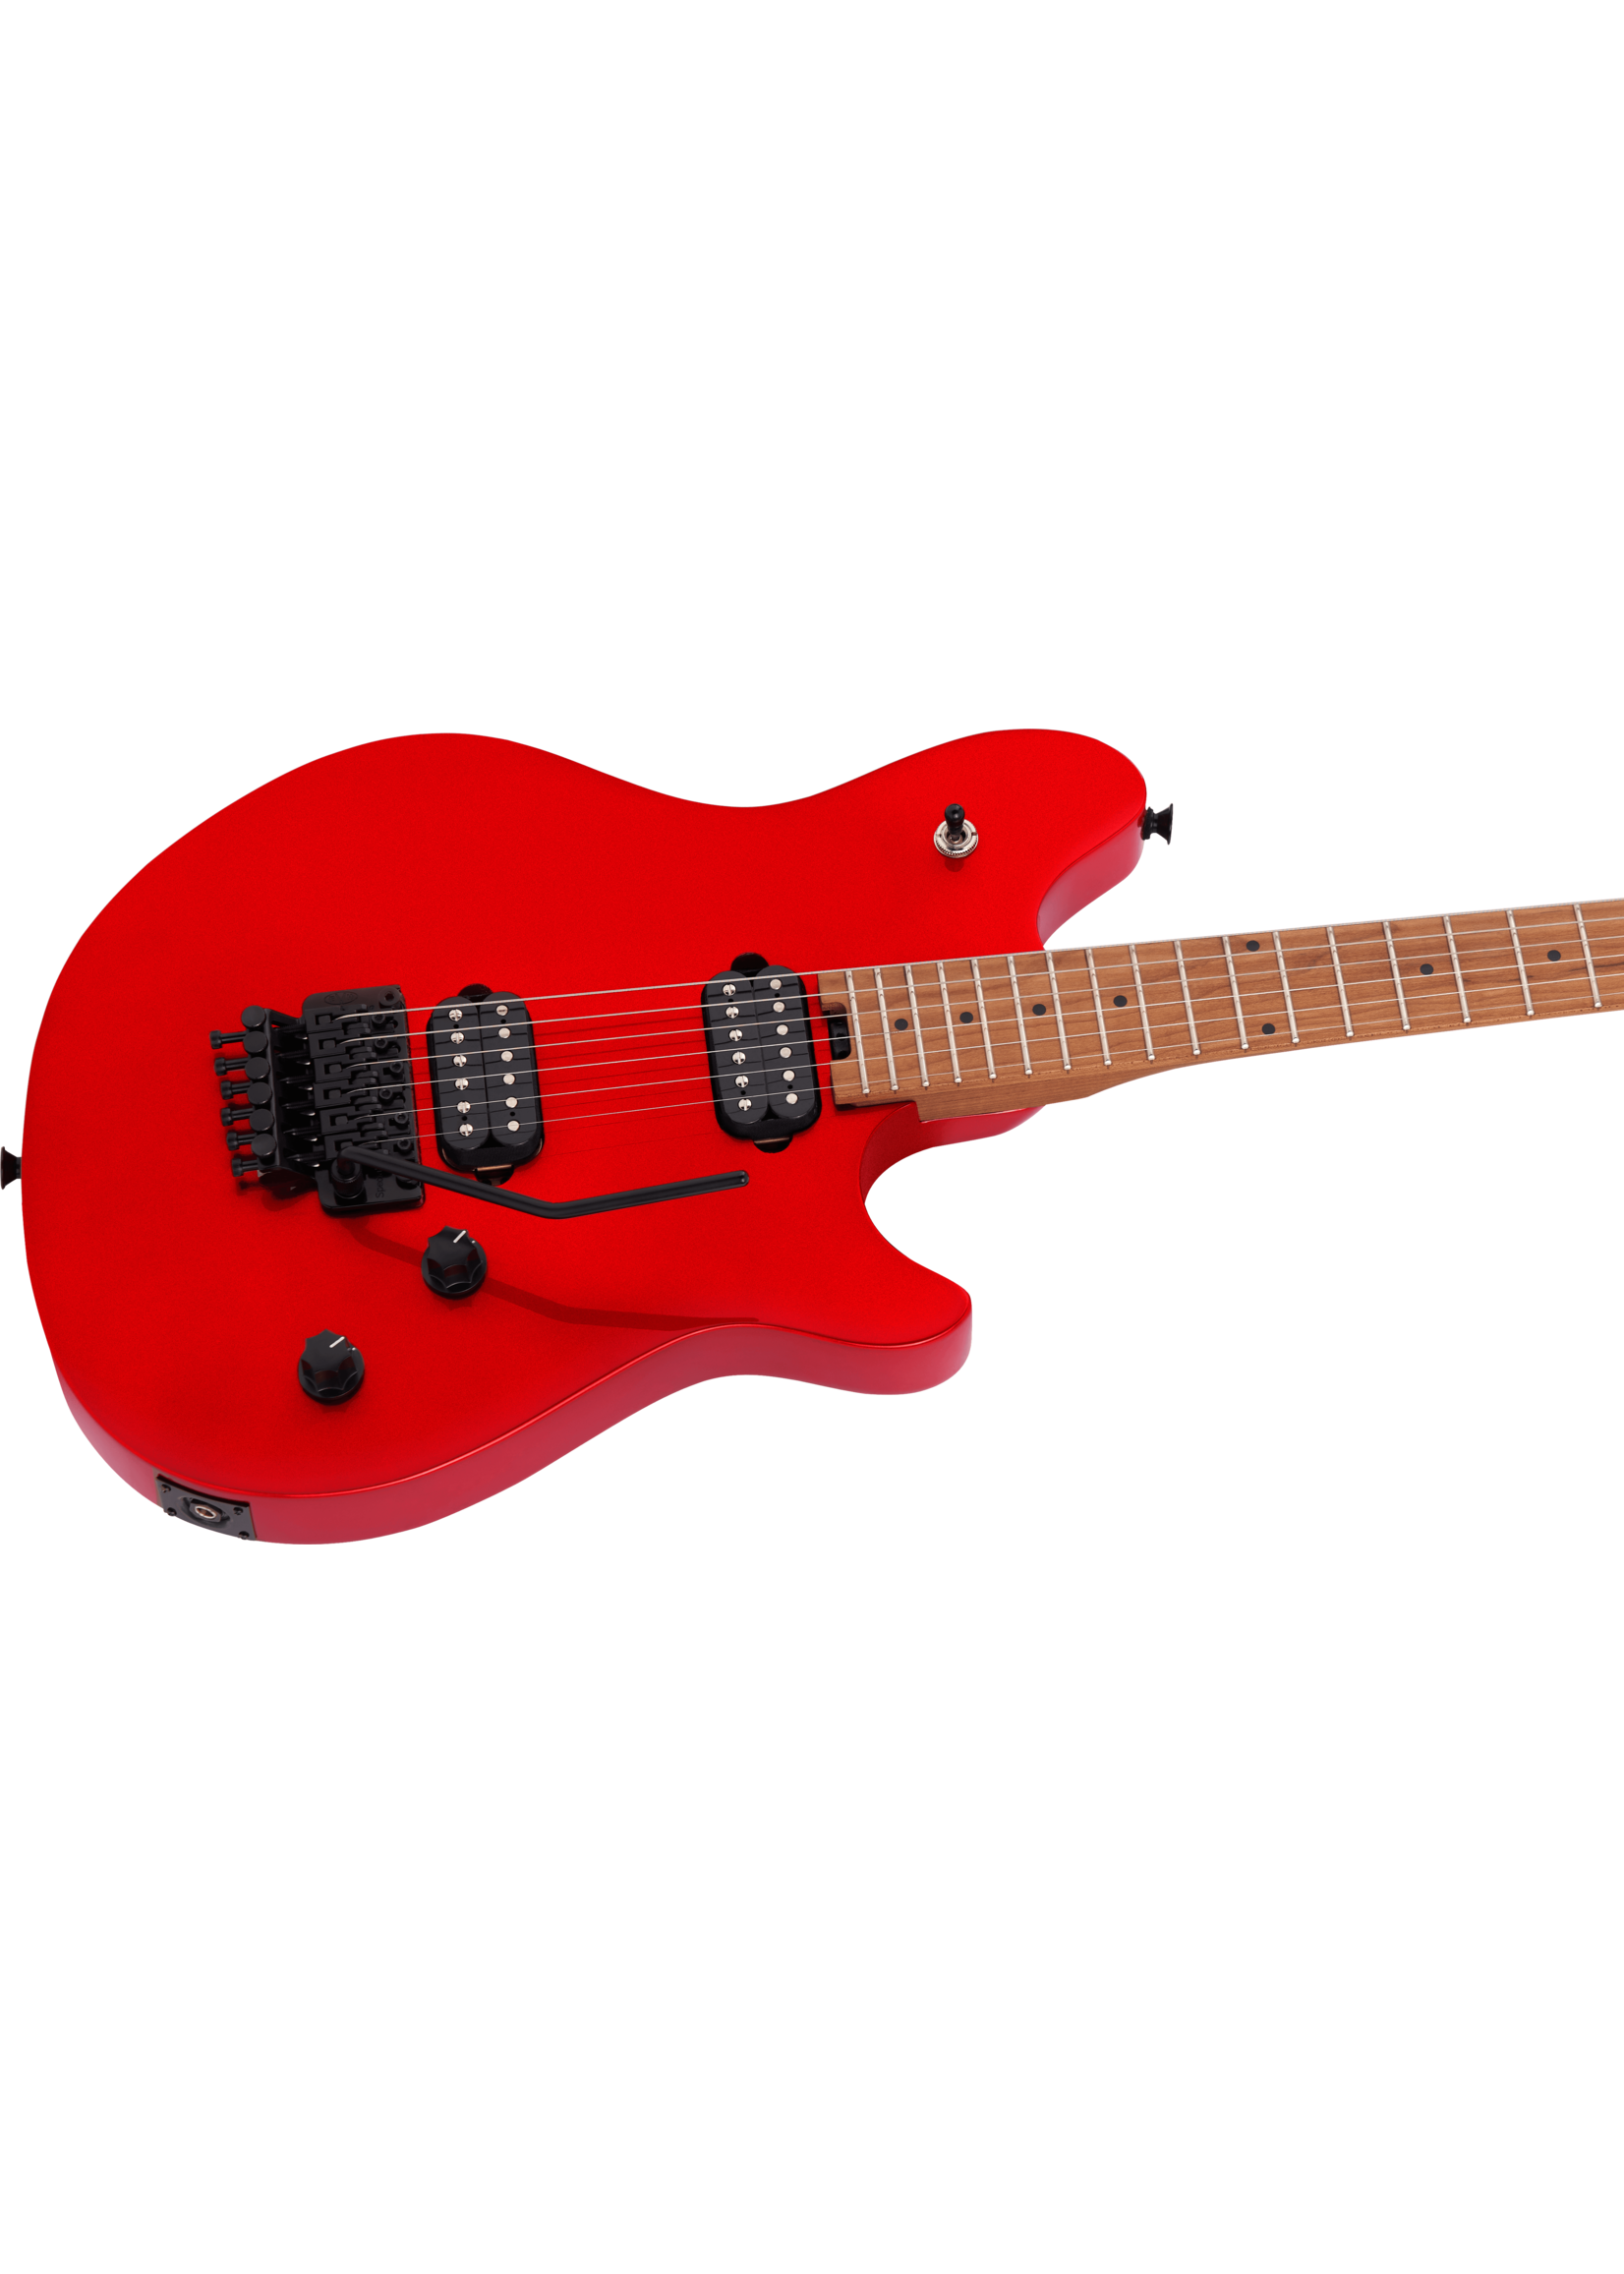 Red Neck Guitar Transparent Free PNG